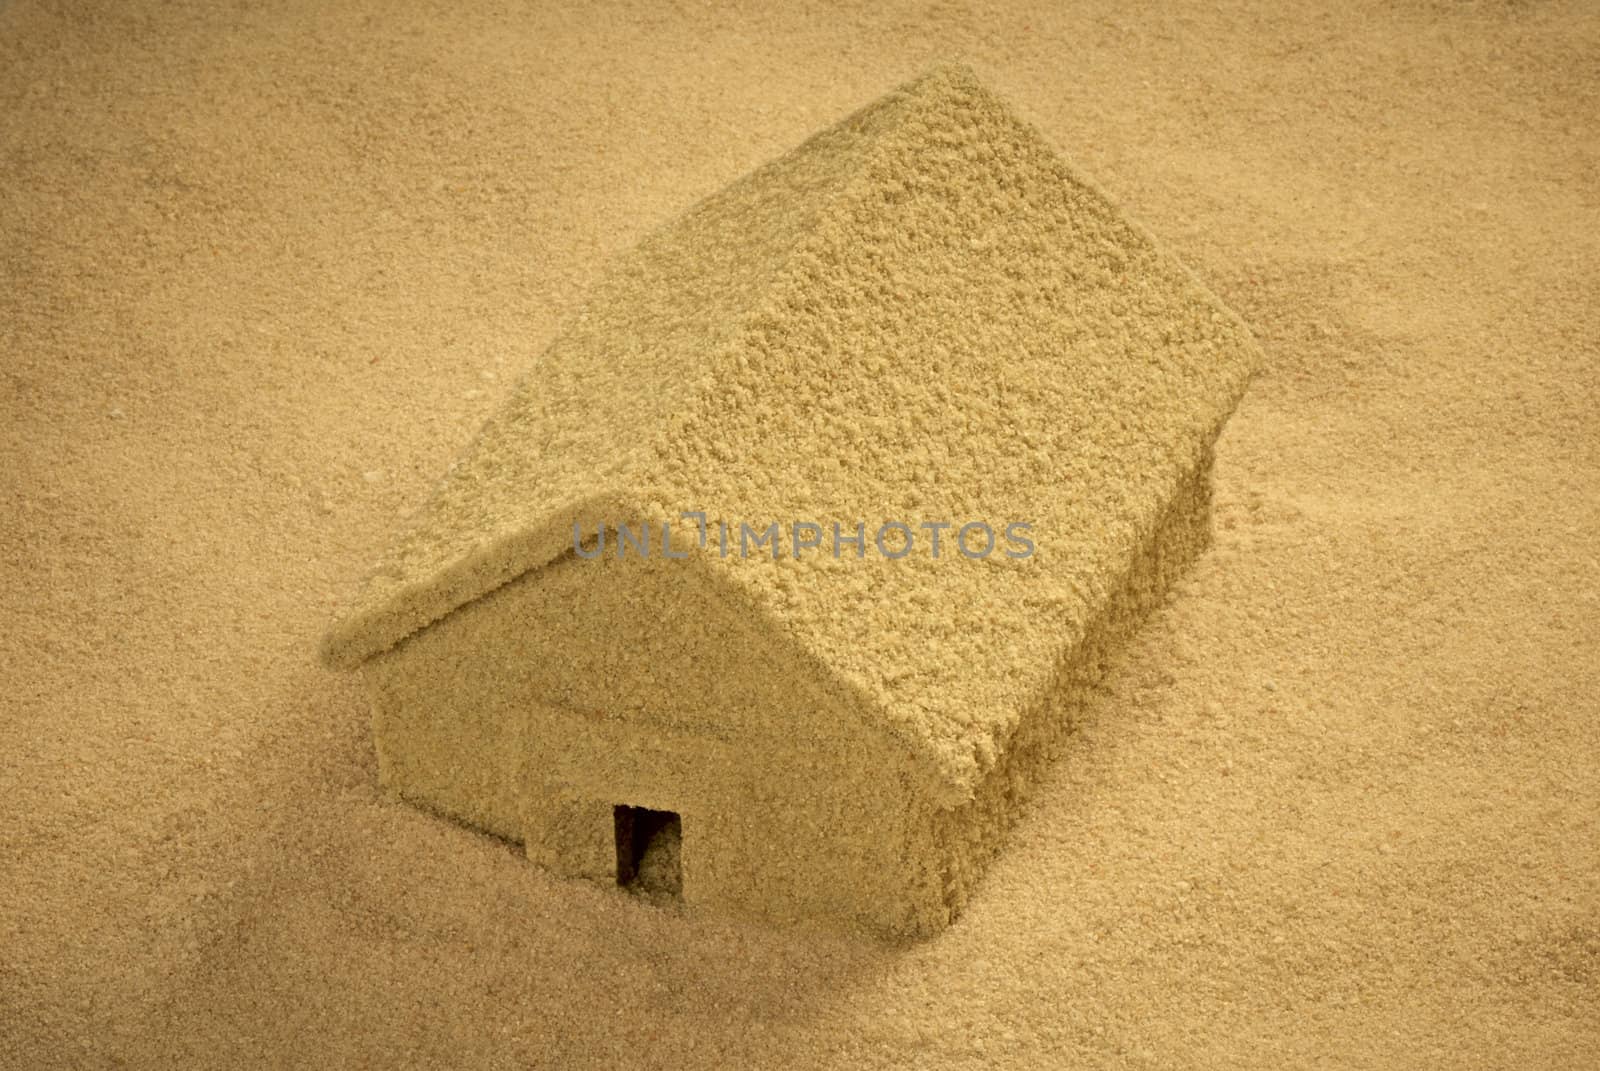 House built of sand